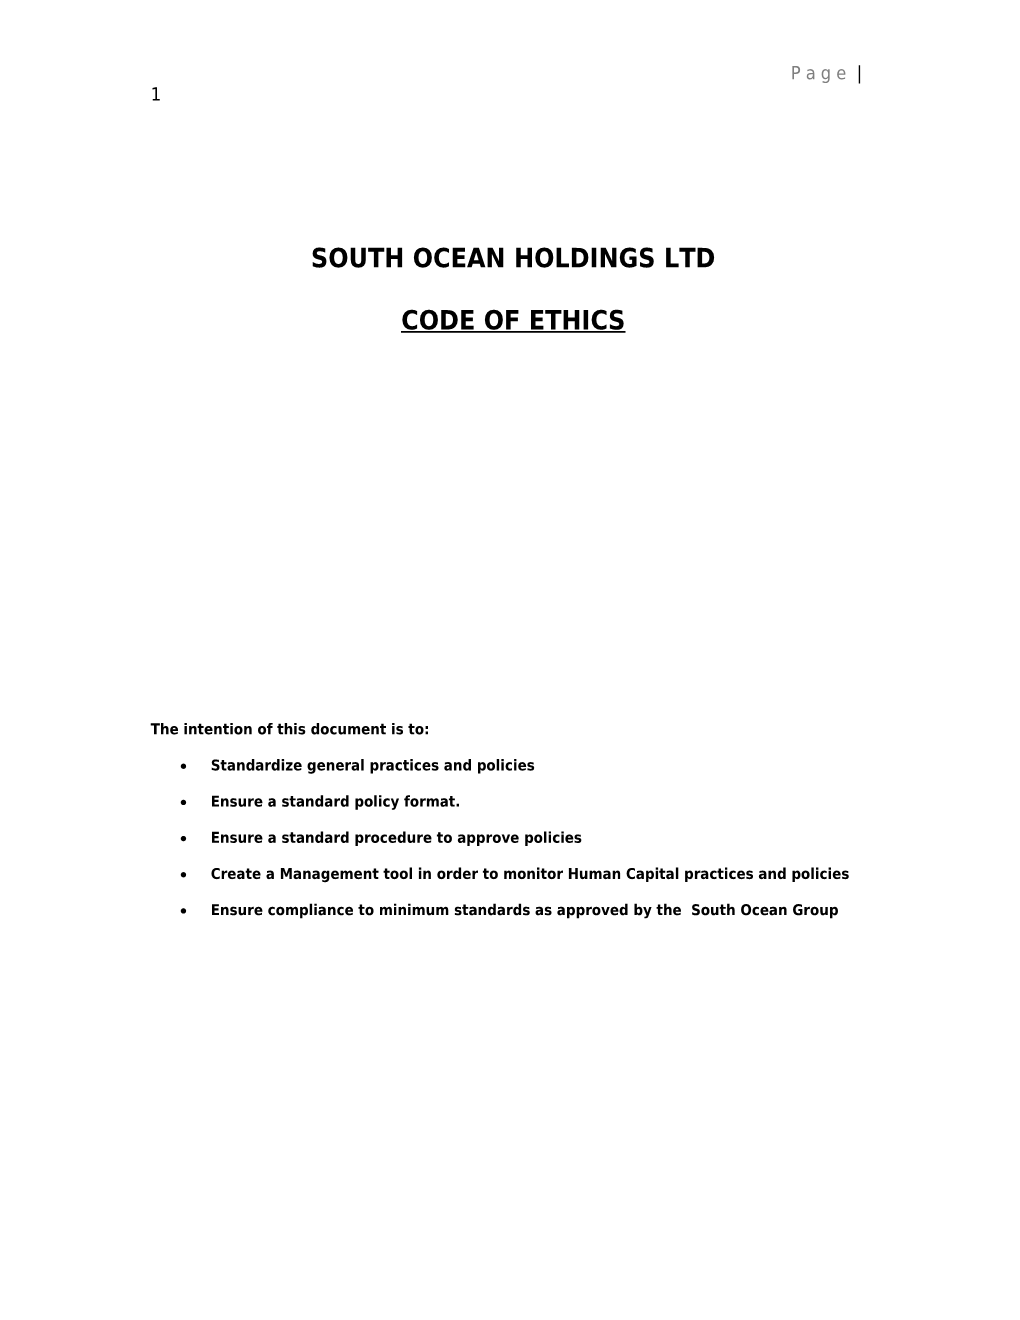 South Ocean Holdings Ltd